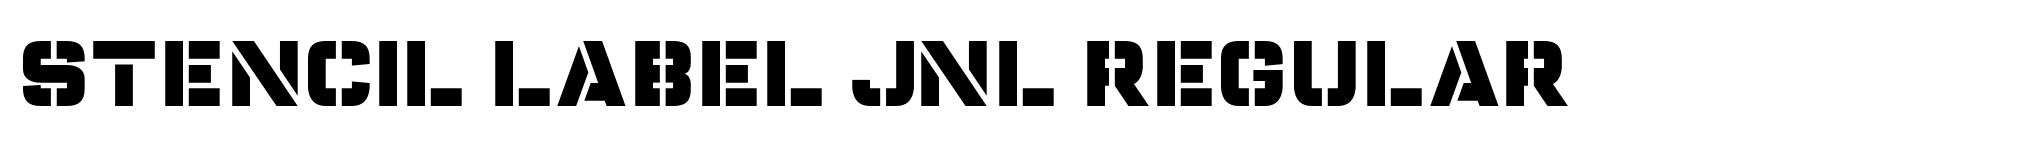 Stencil Label JNL Regular image